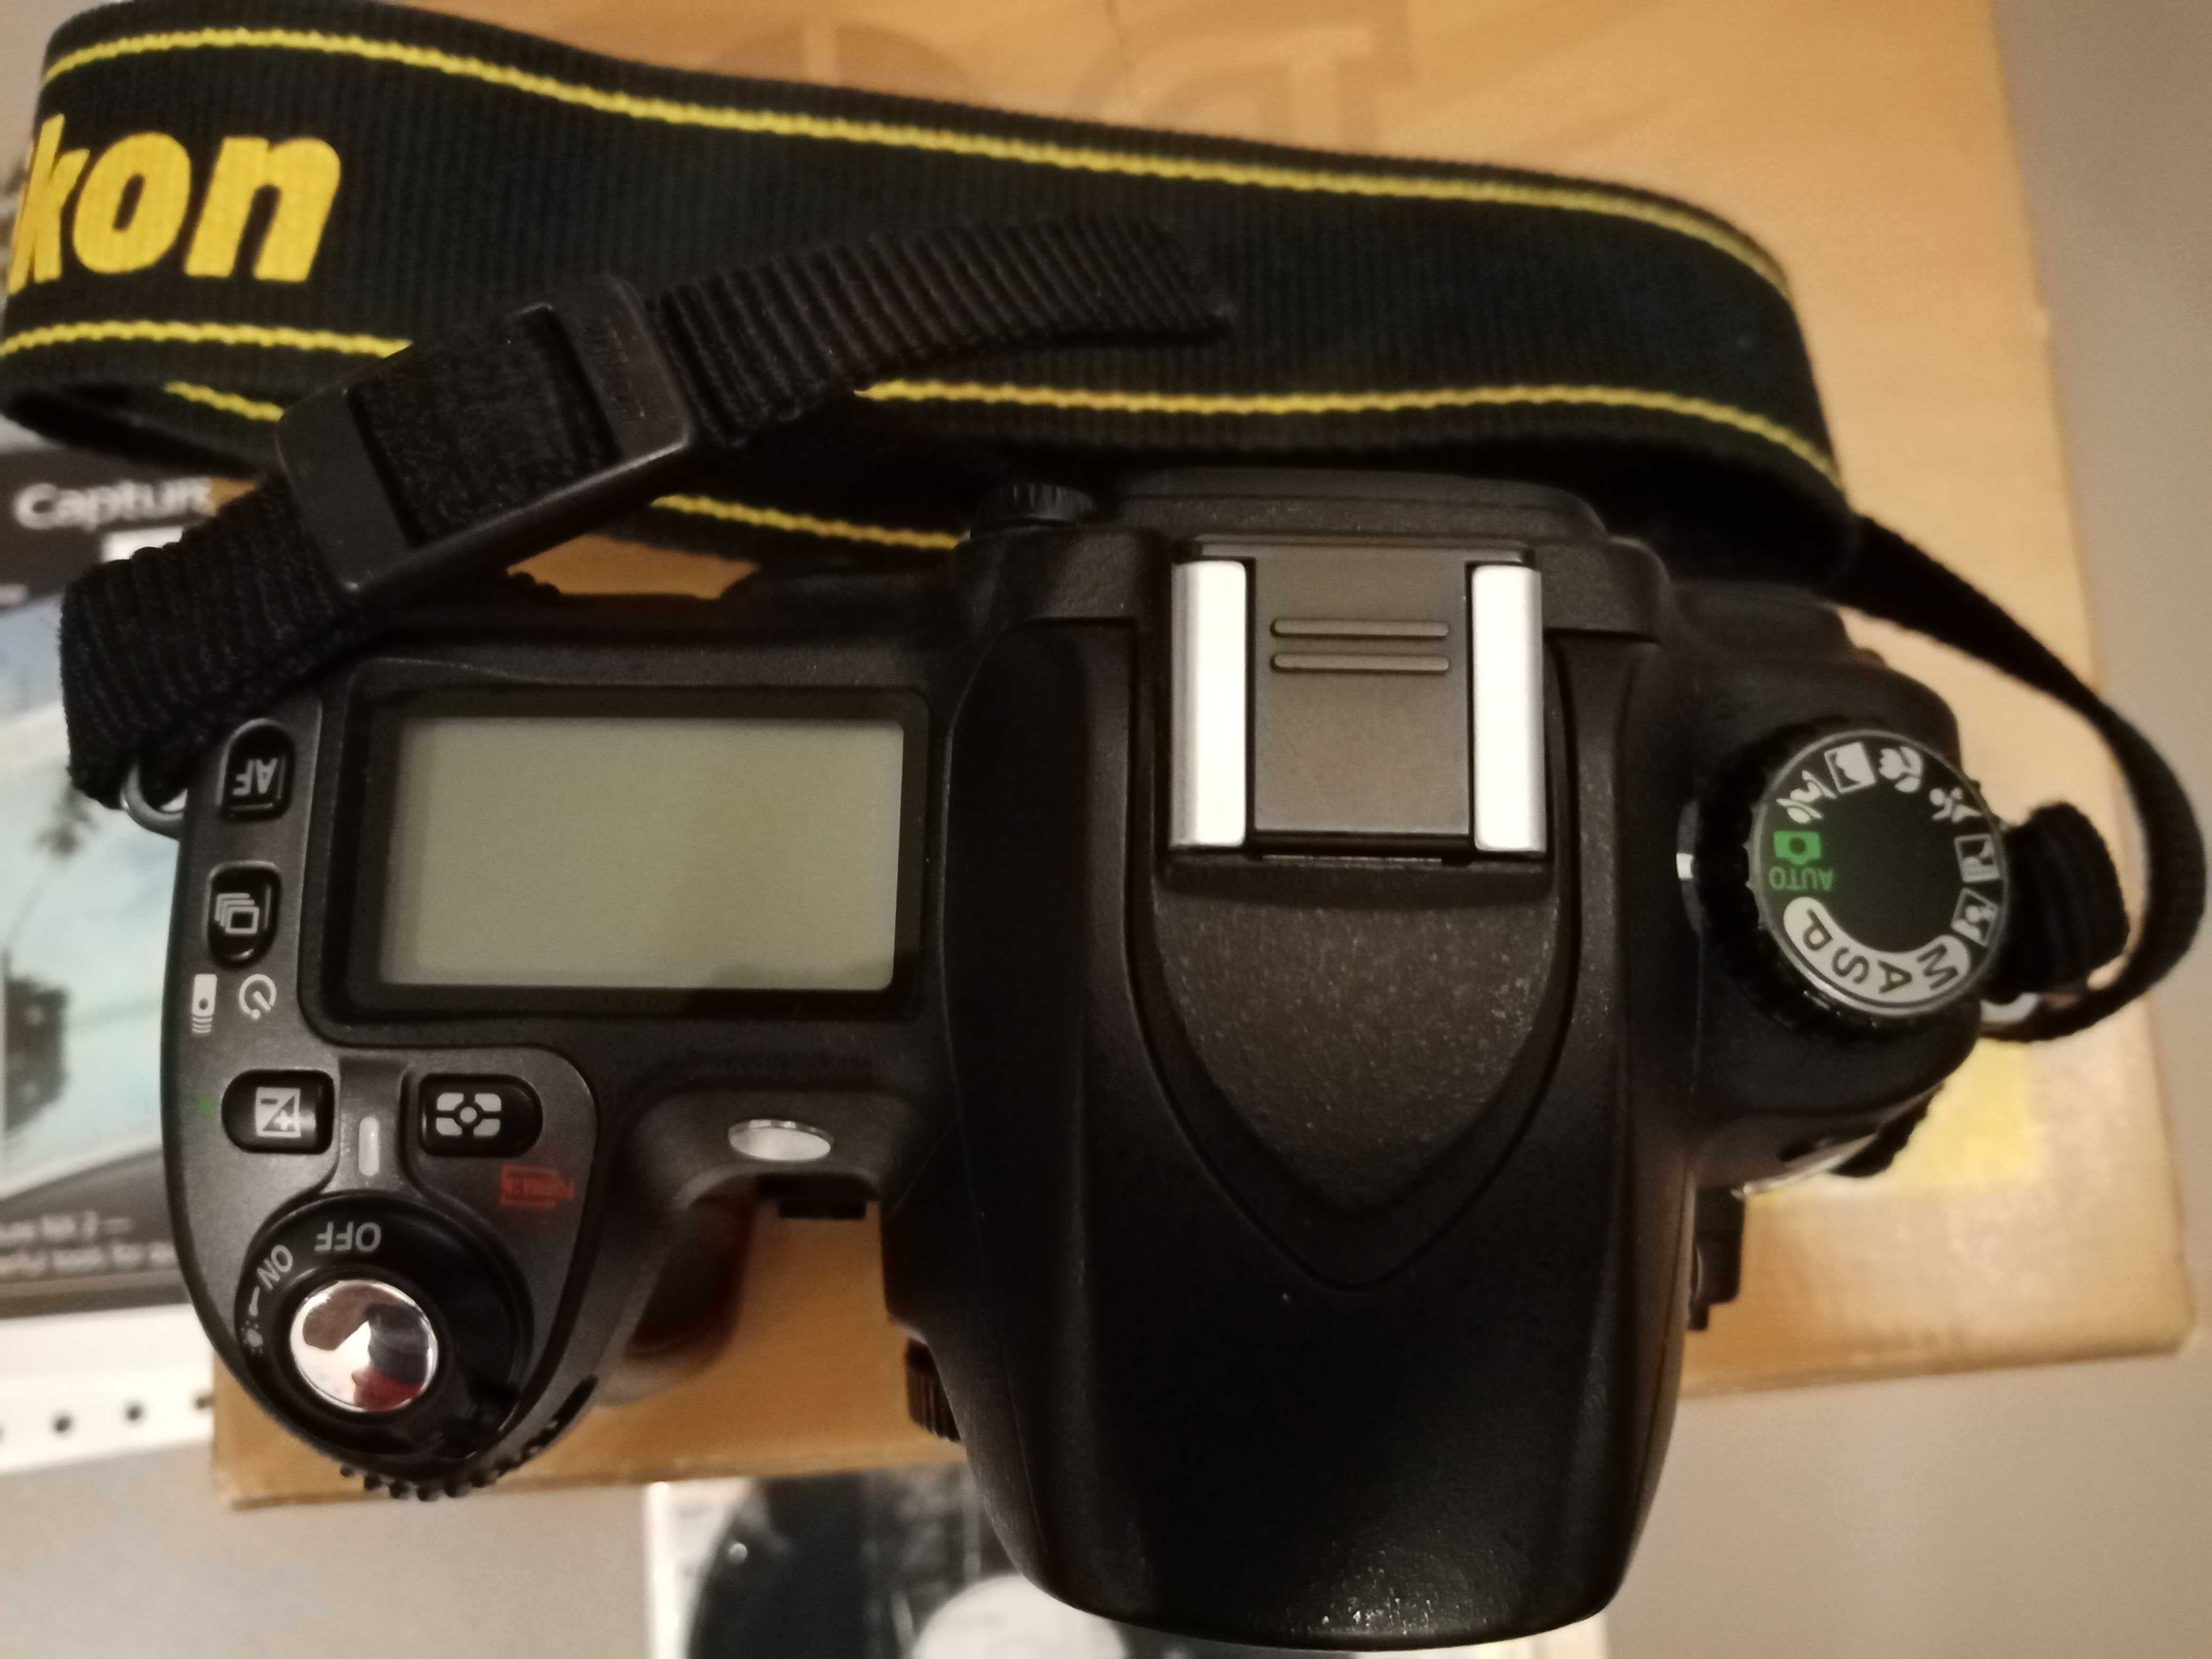 Aparat Nikon D80, ładowarka, pasek, instrukcja, pokrowiec Case Logic !